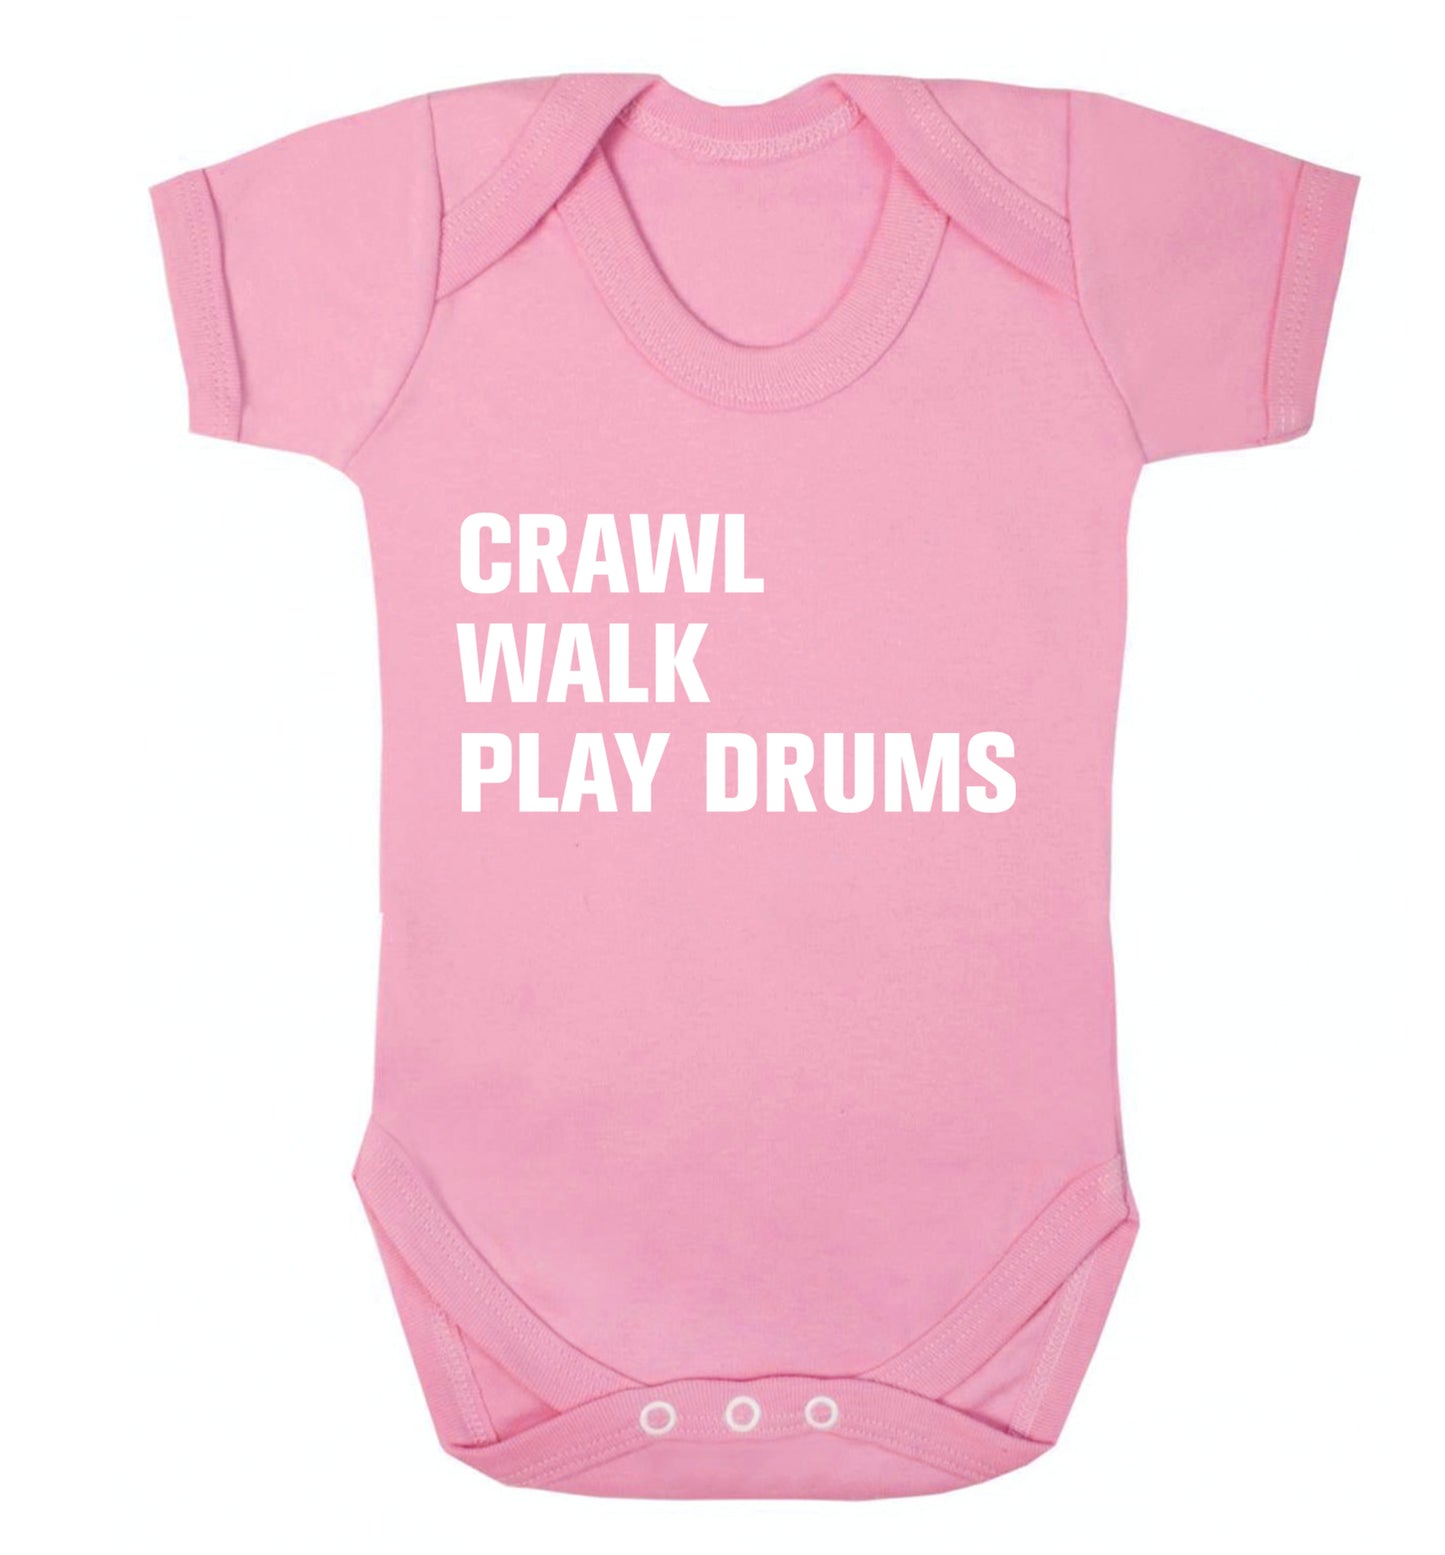 Crawl walk play drums Baby Vest pale pink 18-24 months